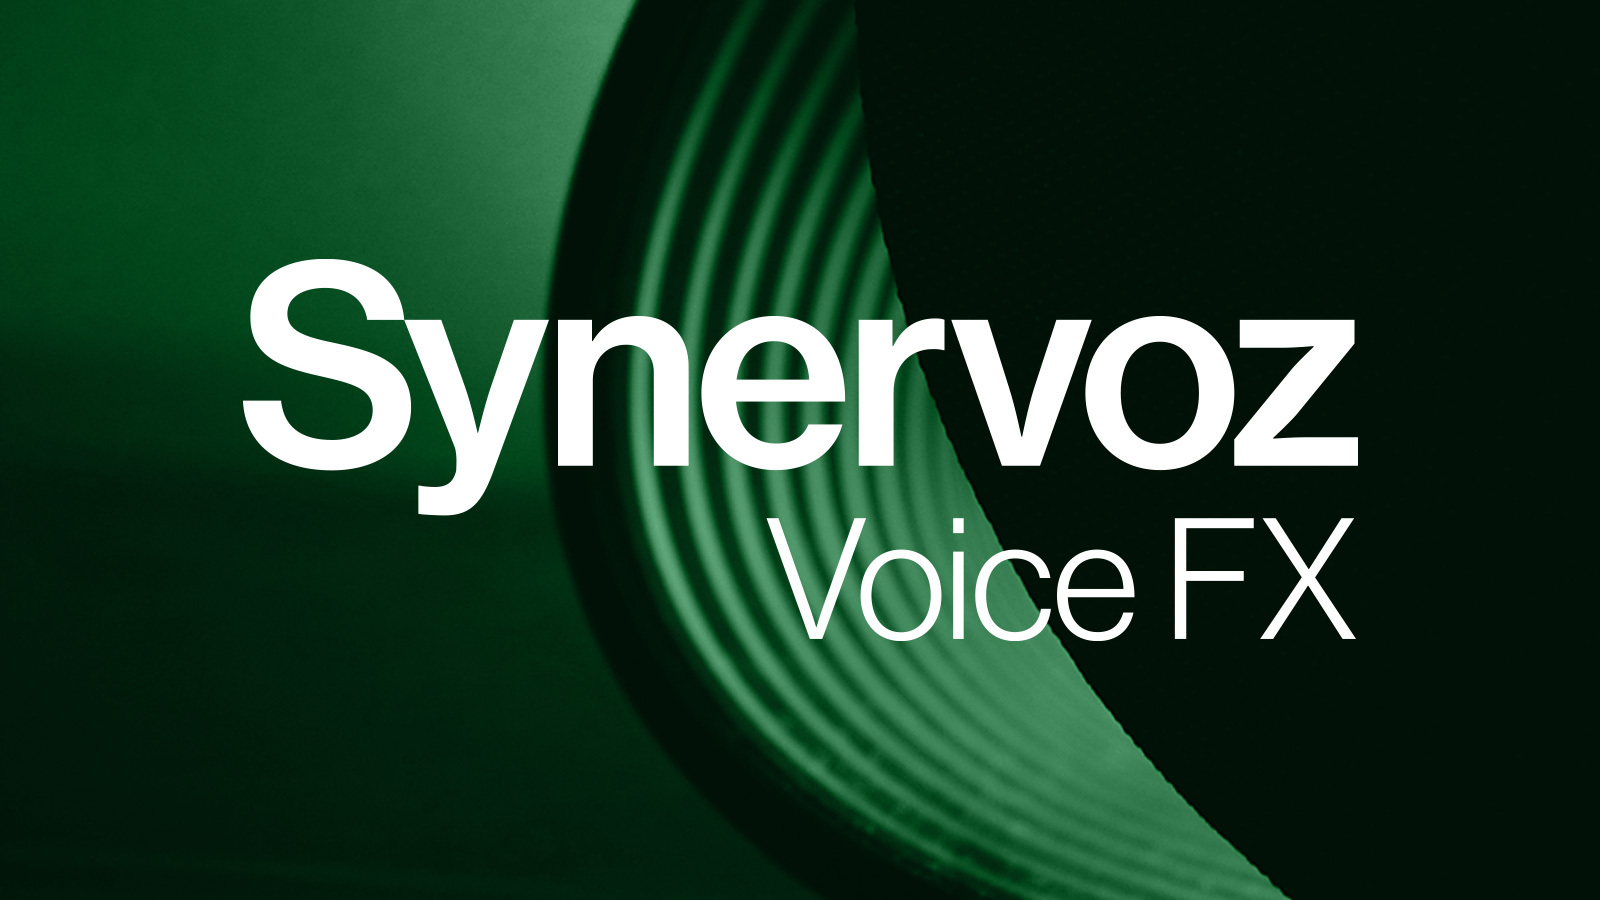 Synervoz Voice FX